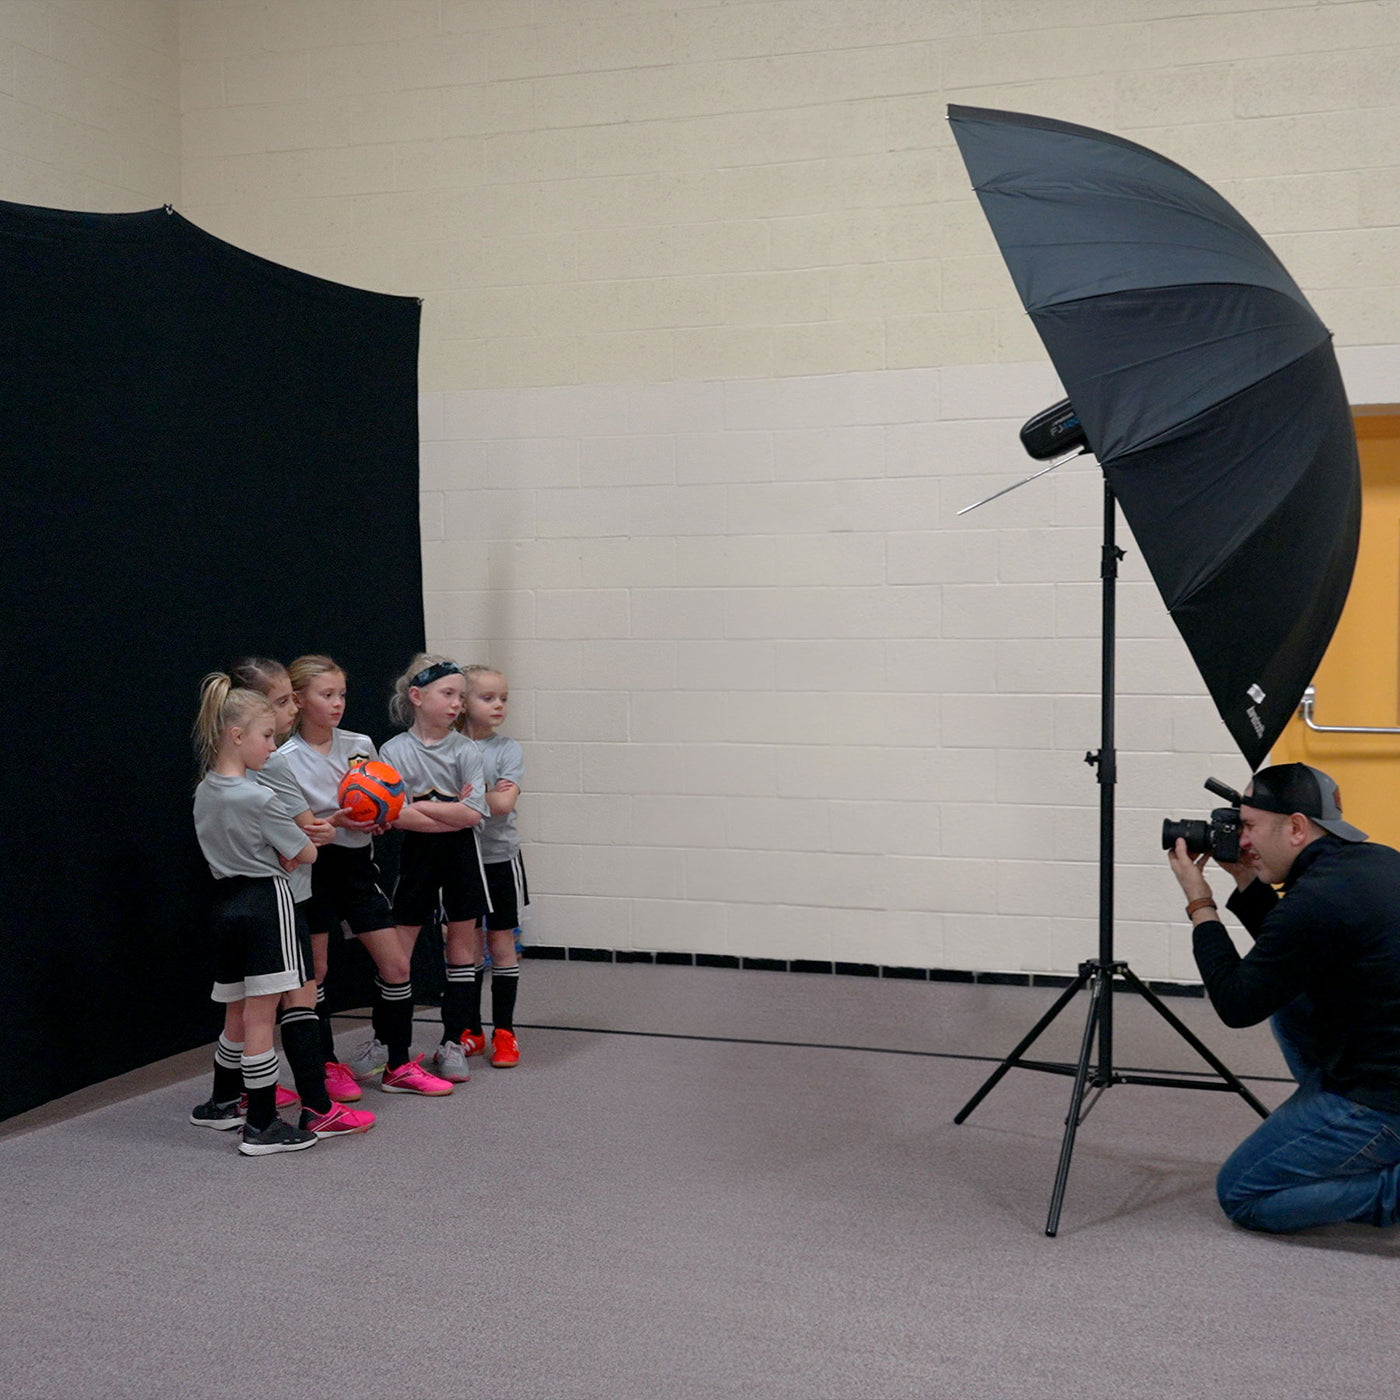 Soccer team portrait shoot using 8' x 8' X-Drop Pro wrinkle-resistant backdrop